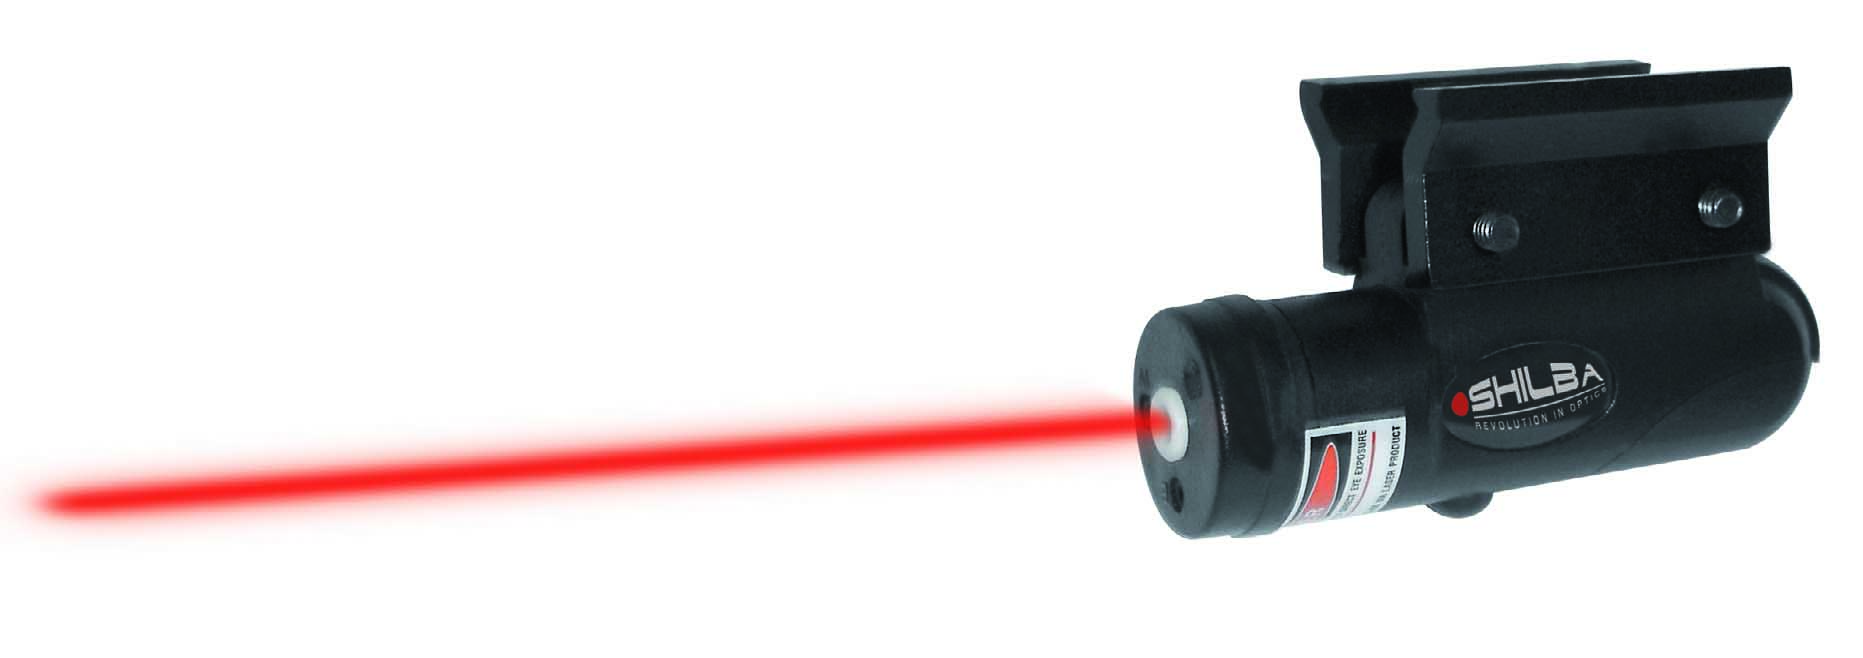 Laser SHILBA modelo UNIVERSAL.-0